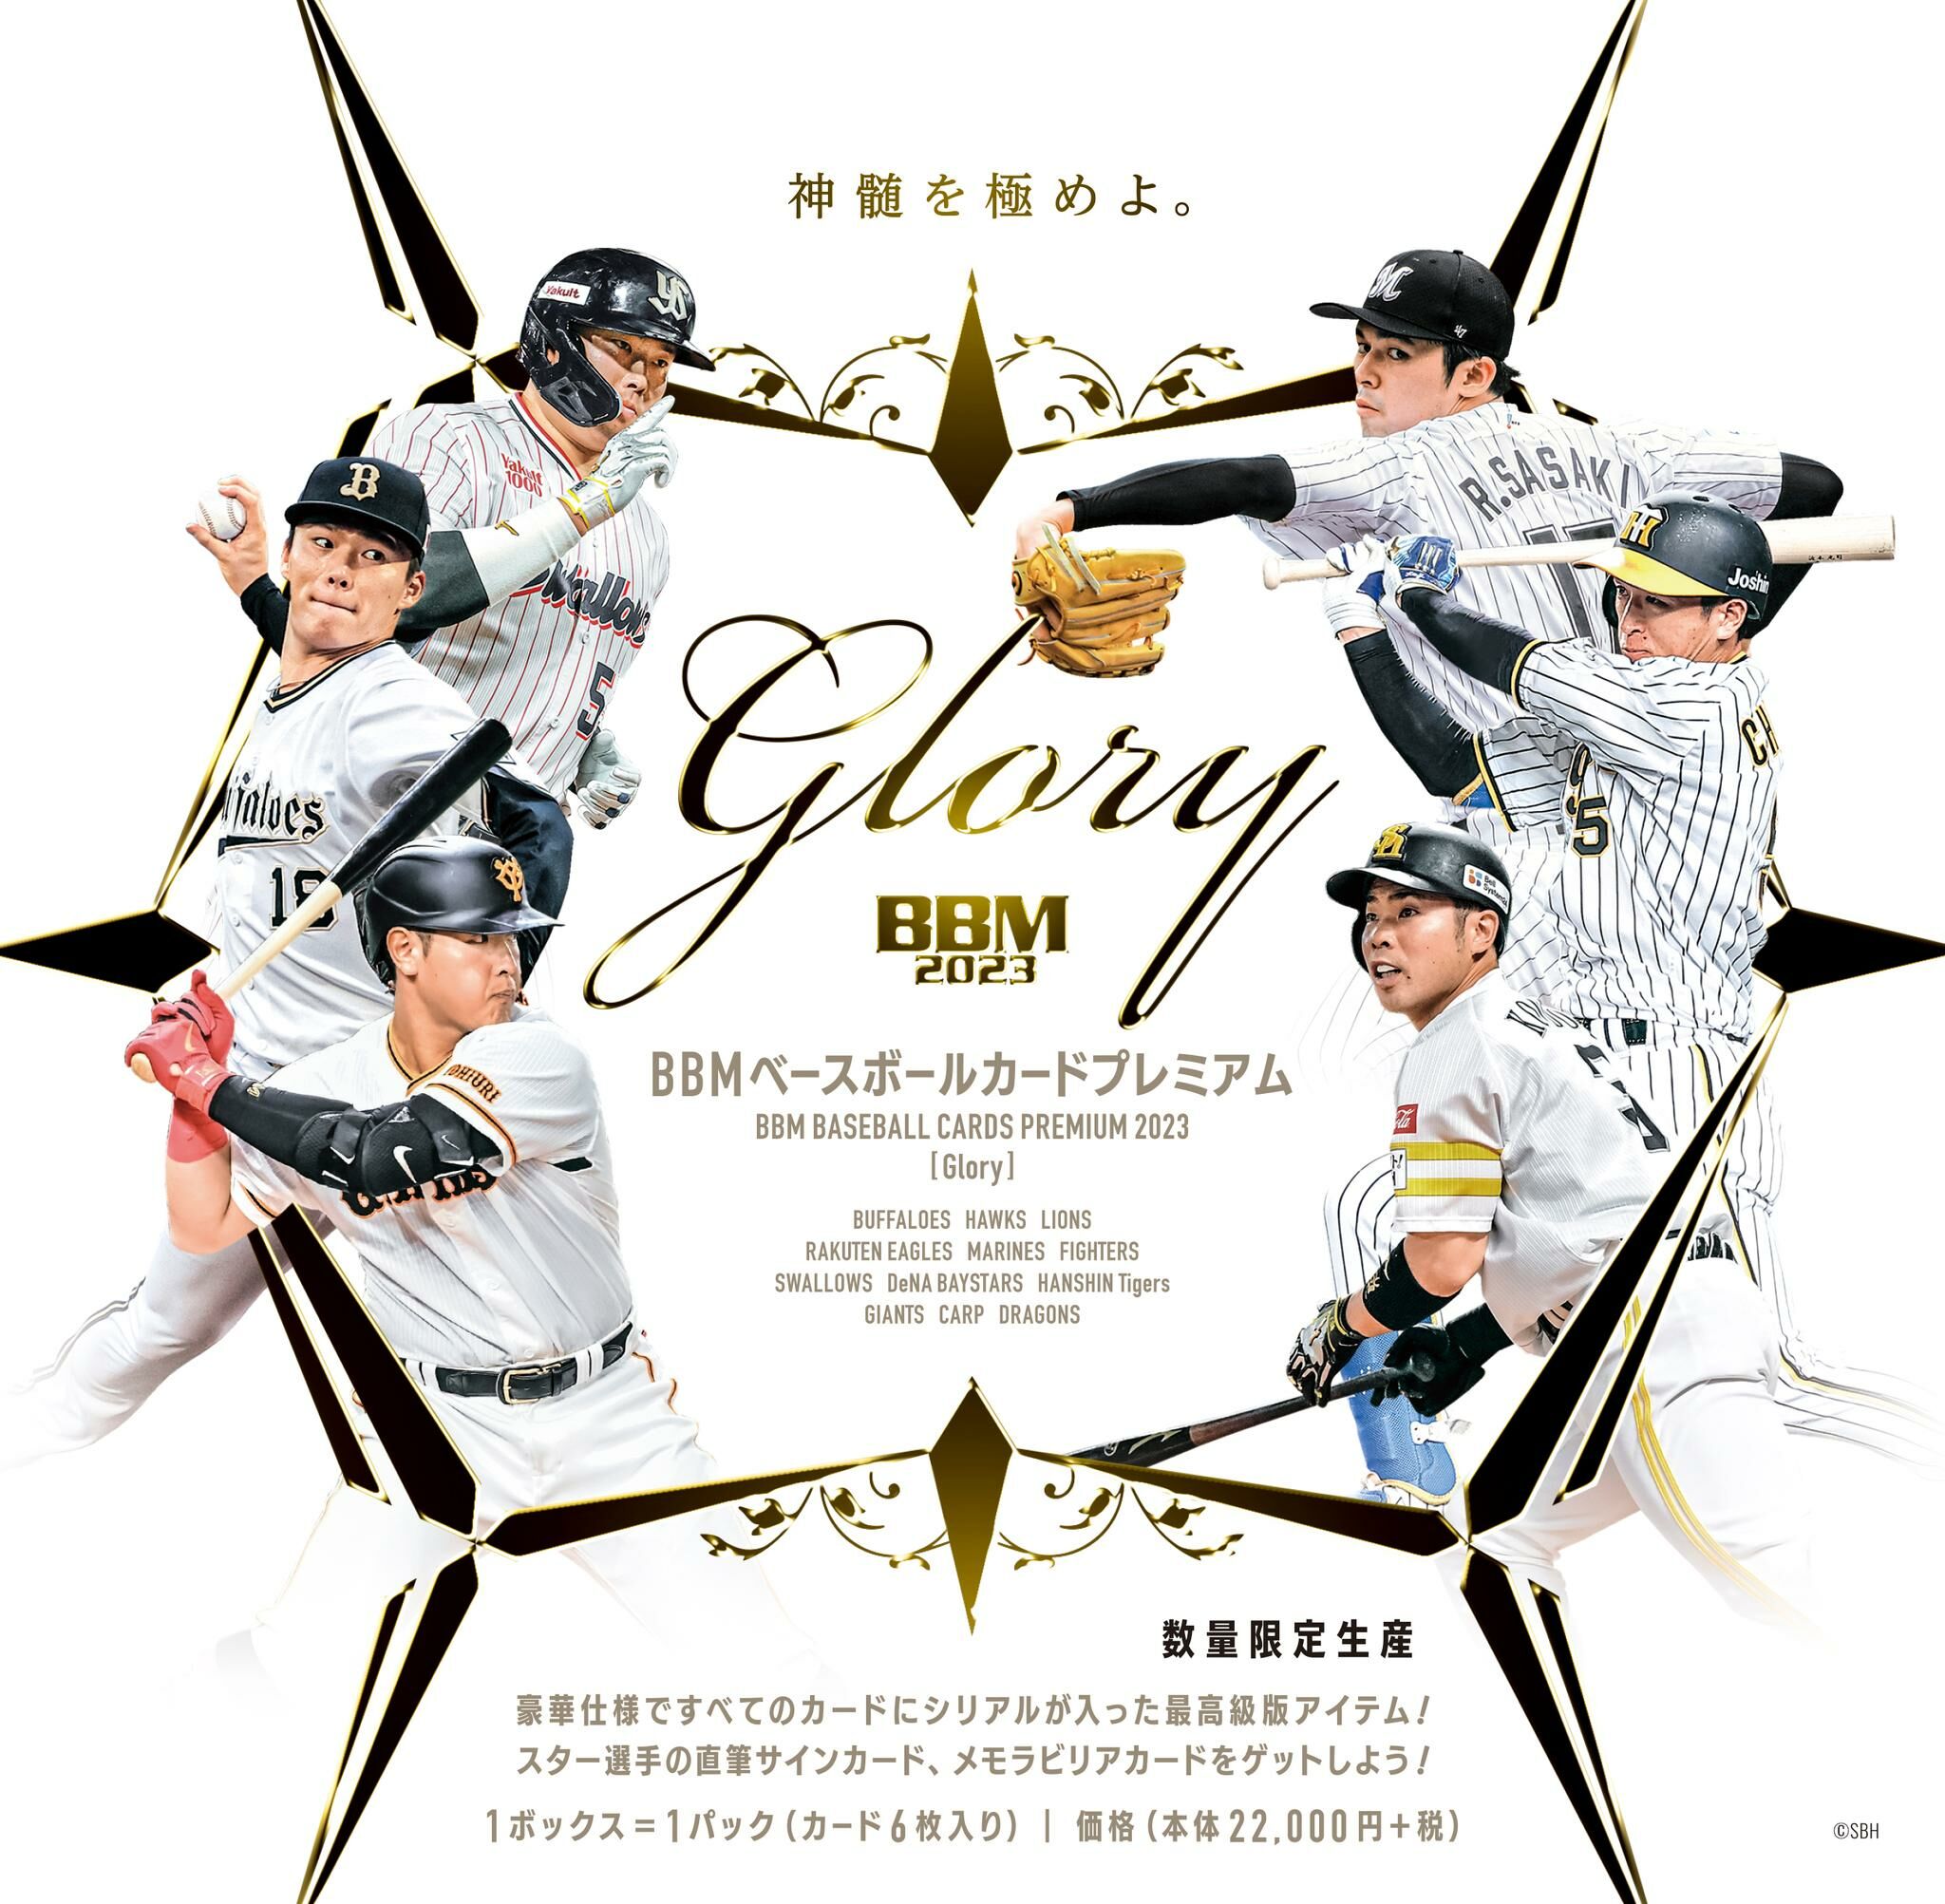 NPB 2023 BBM Premium Glory NEO 新榮耀高價版日本職棒卡盒( 全球超限量